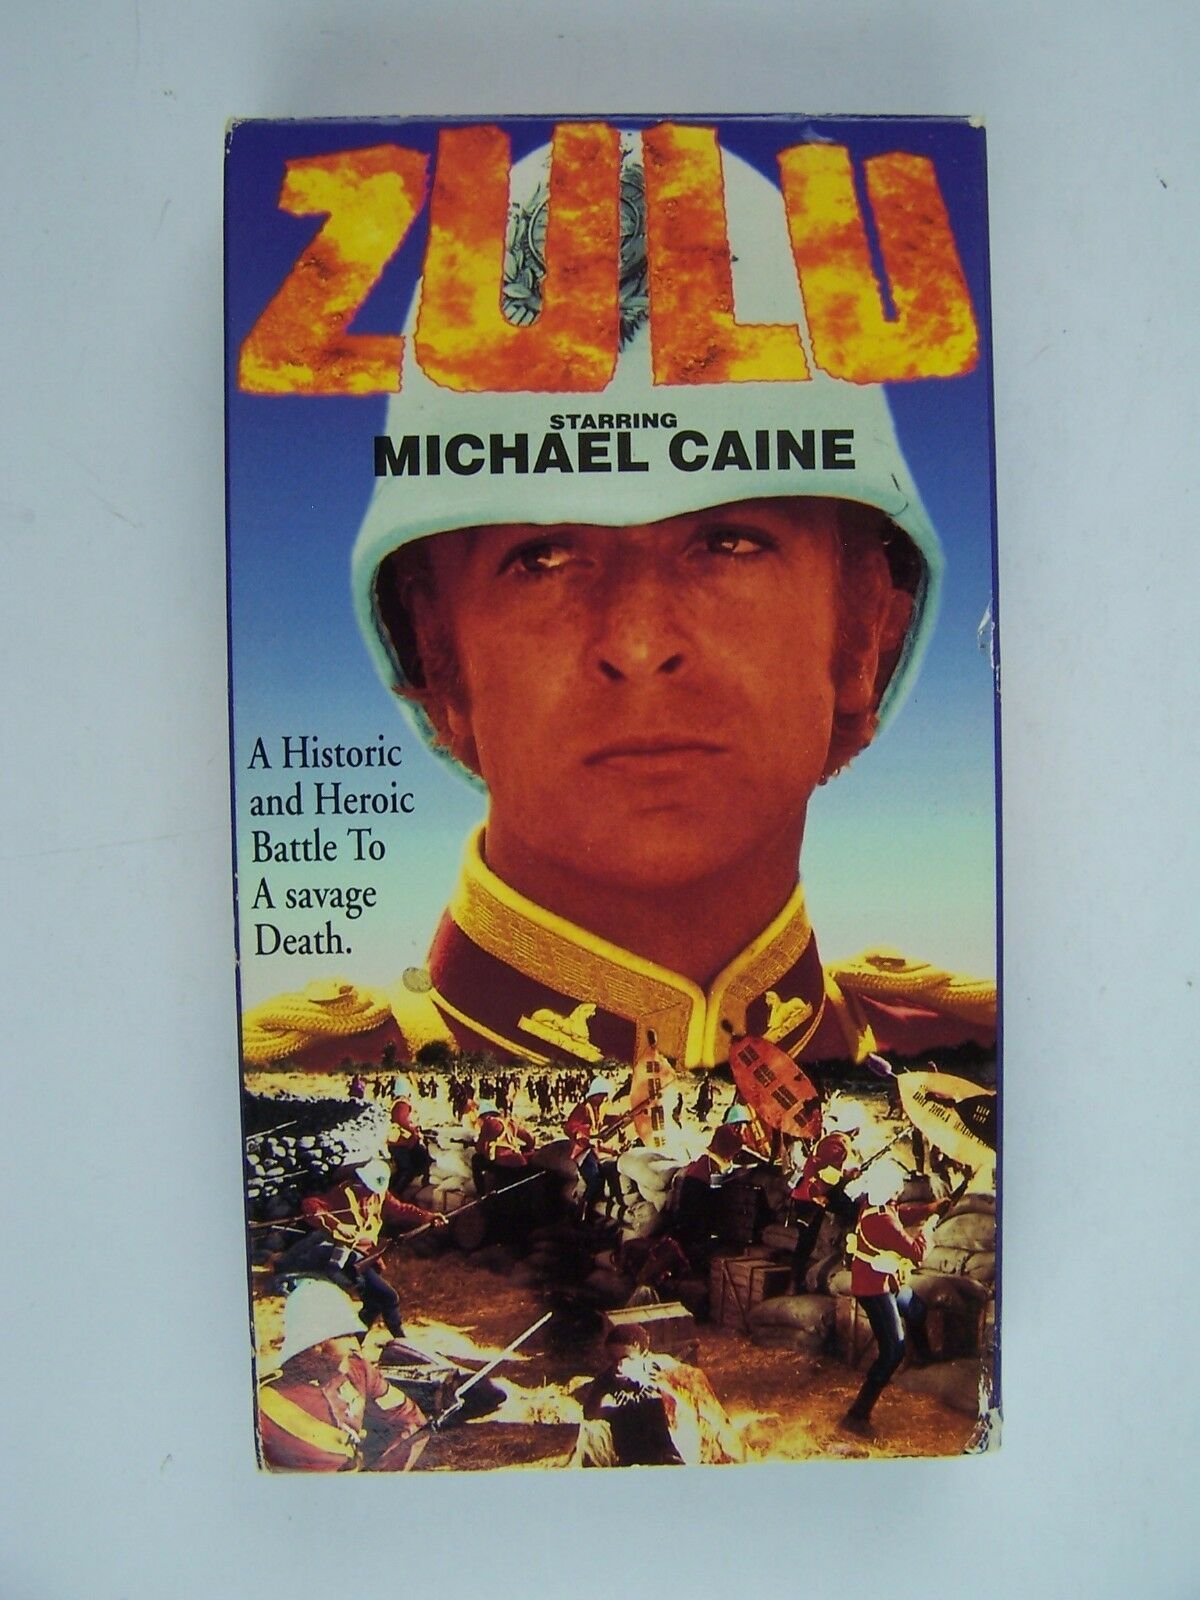 Zulu VHS Michael Caine, Stanley Baker, Jack Hawkins - VHS Tapes